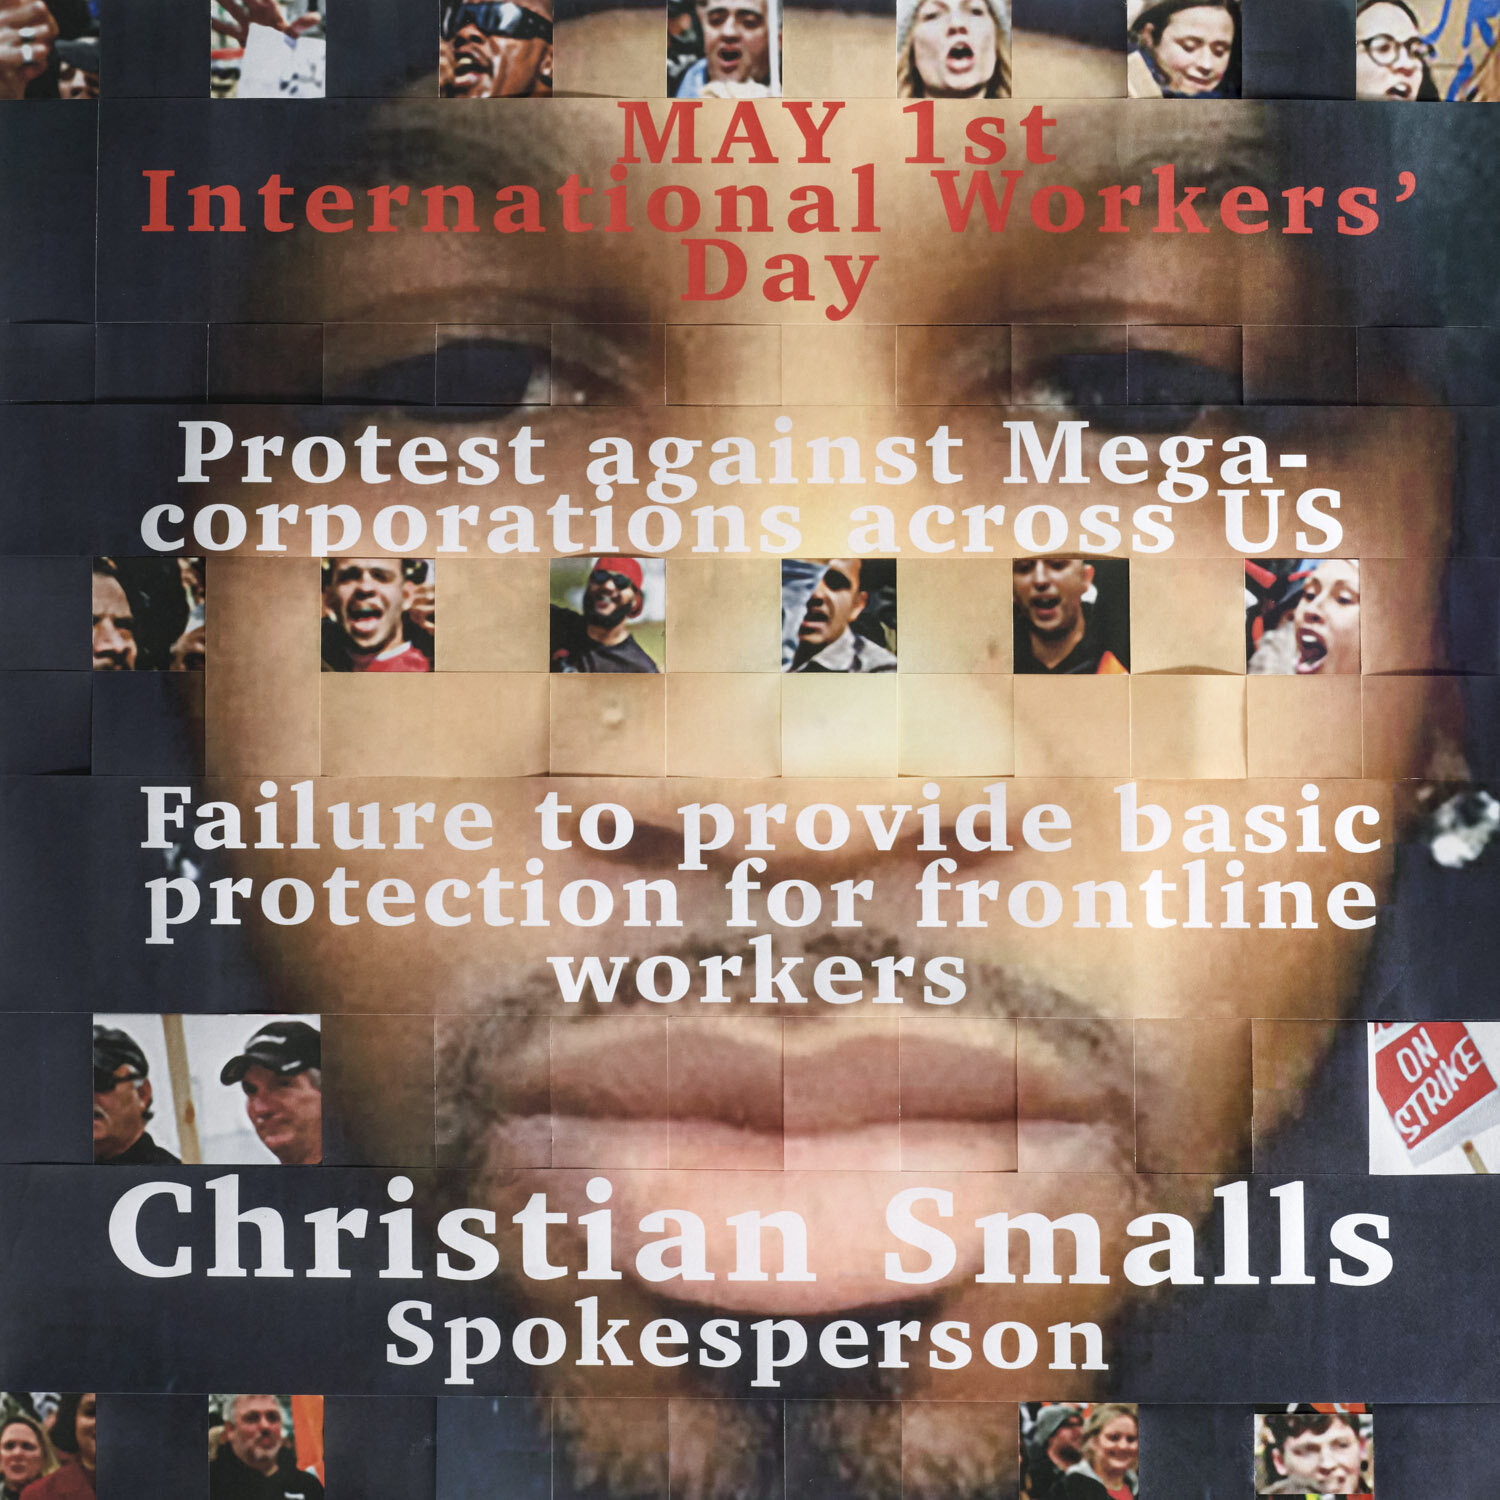 Day 23: Christian Smalls